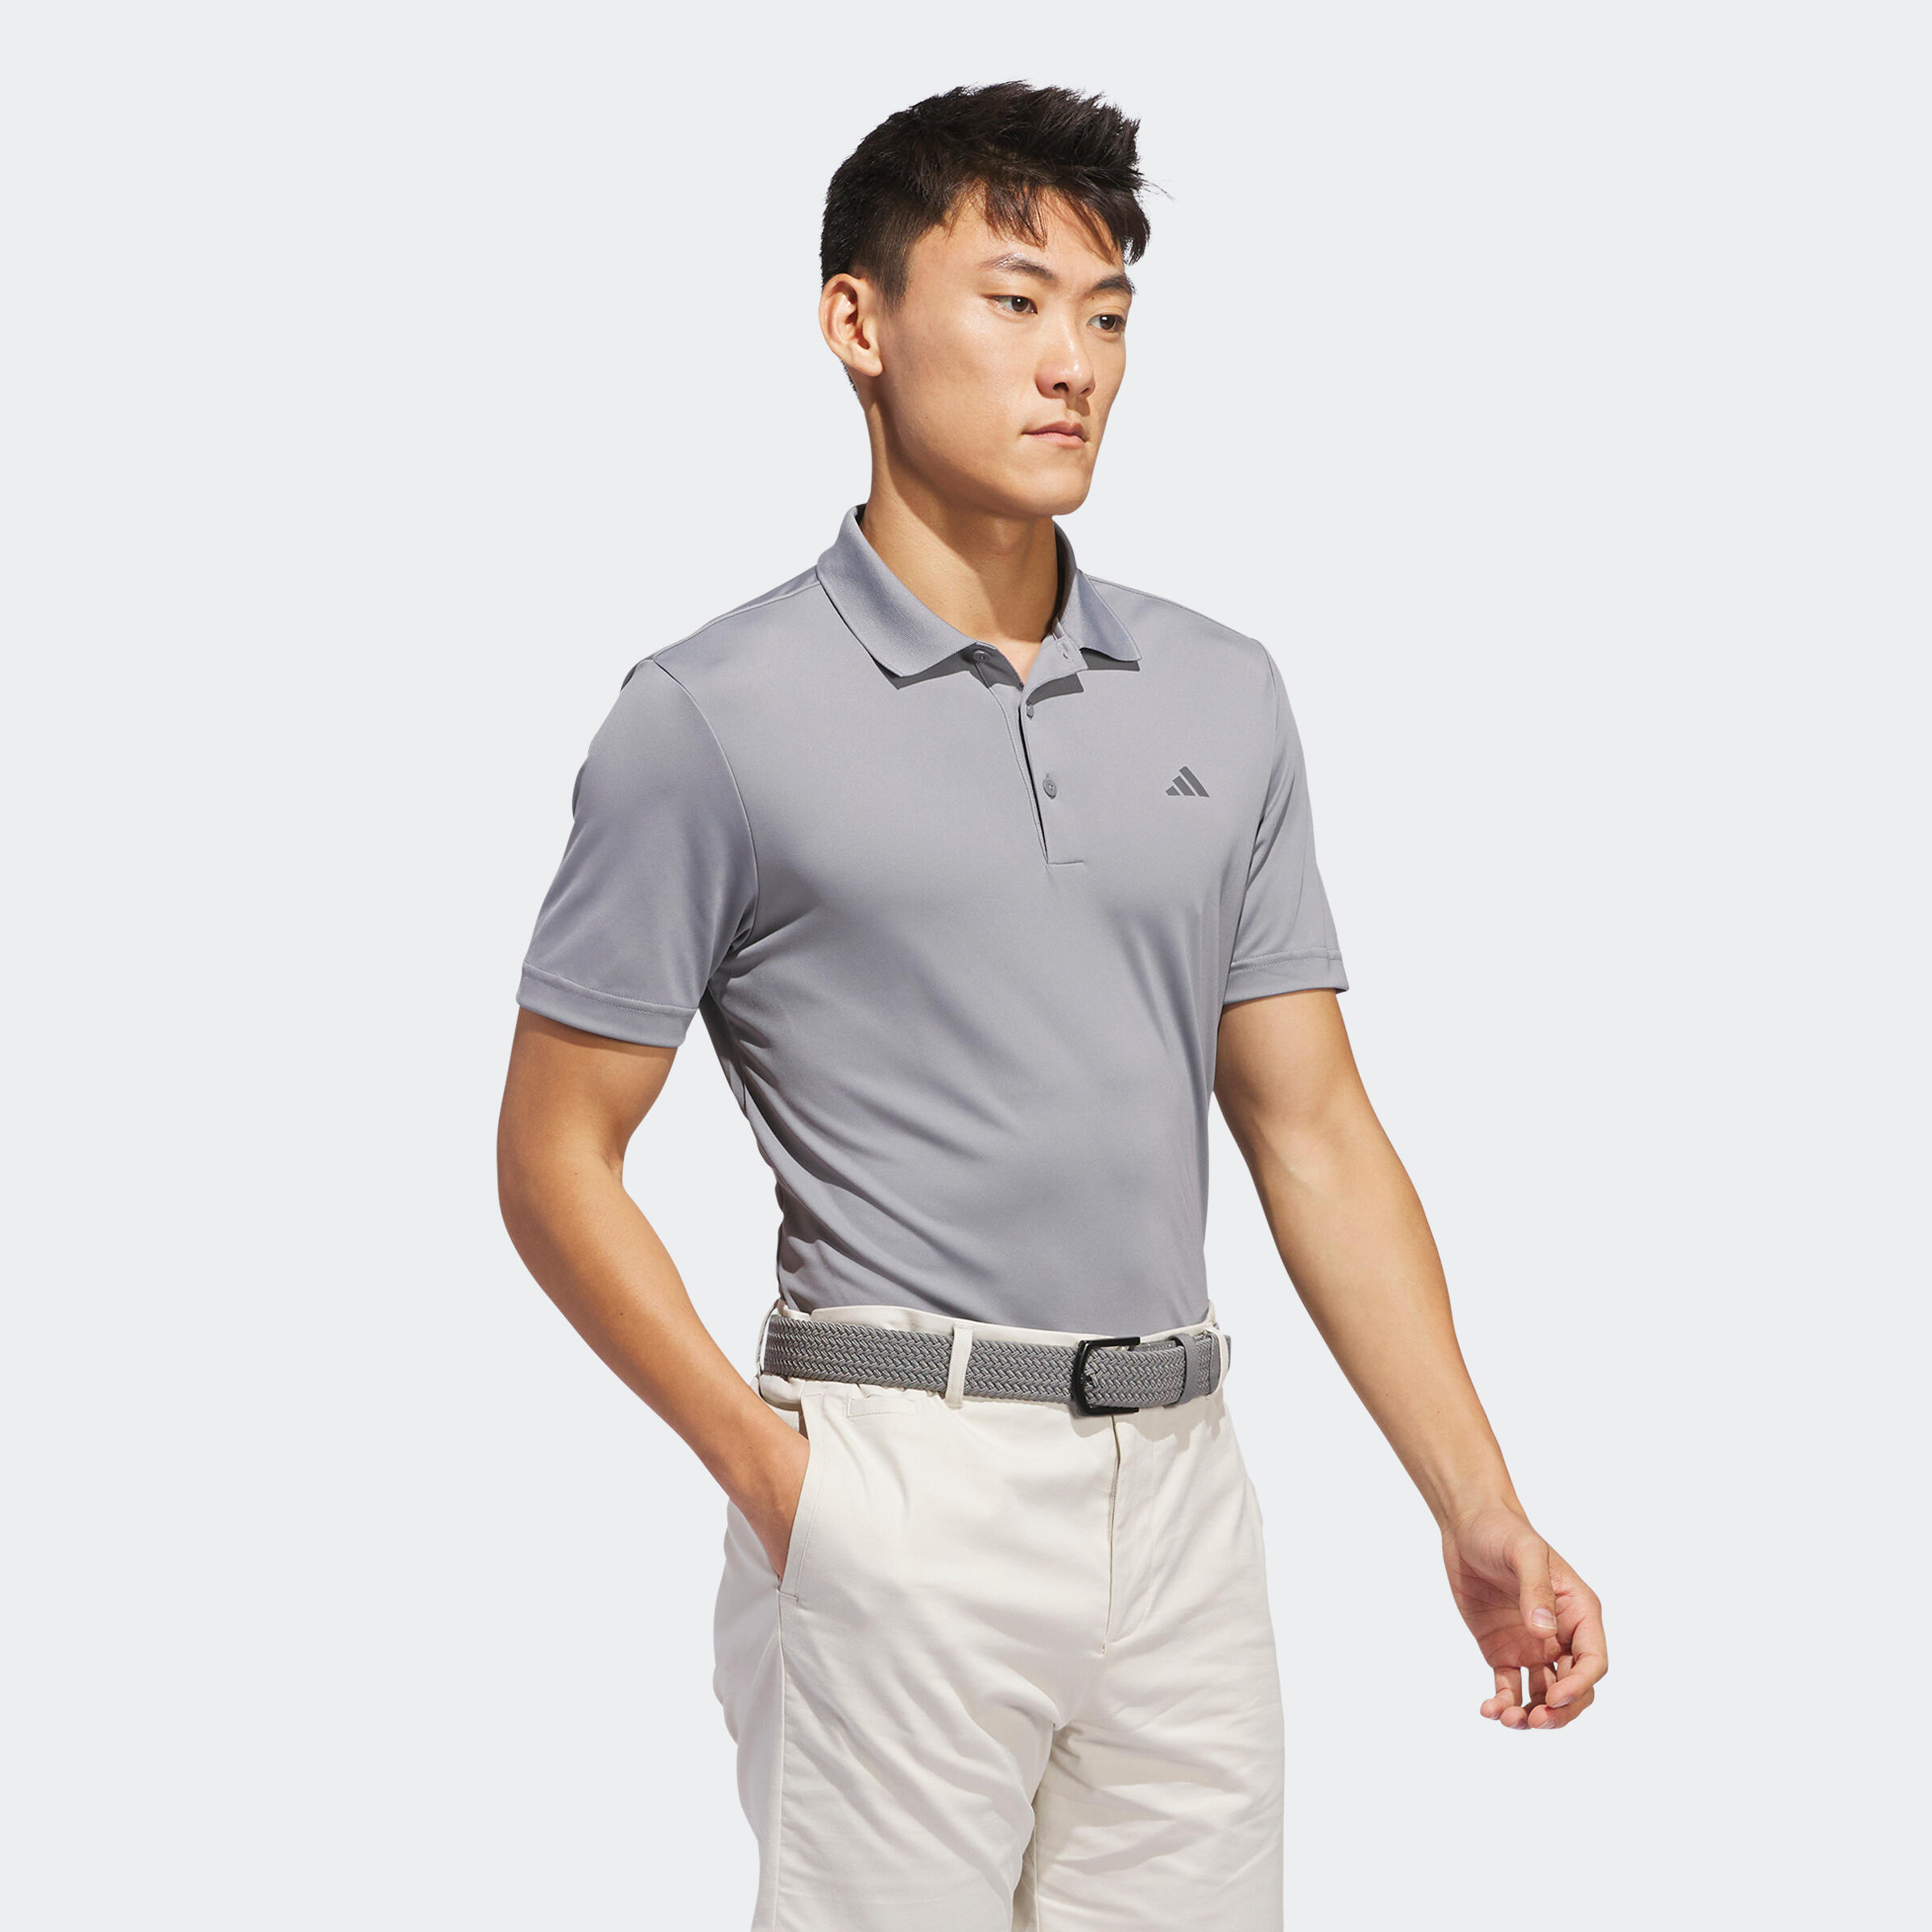 ADIDAS Men's golf short sleeve polo shirt - Adidas grey